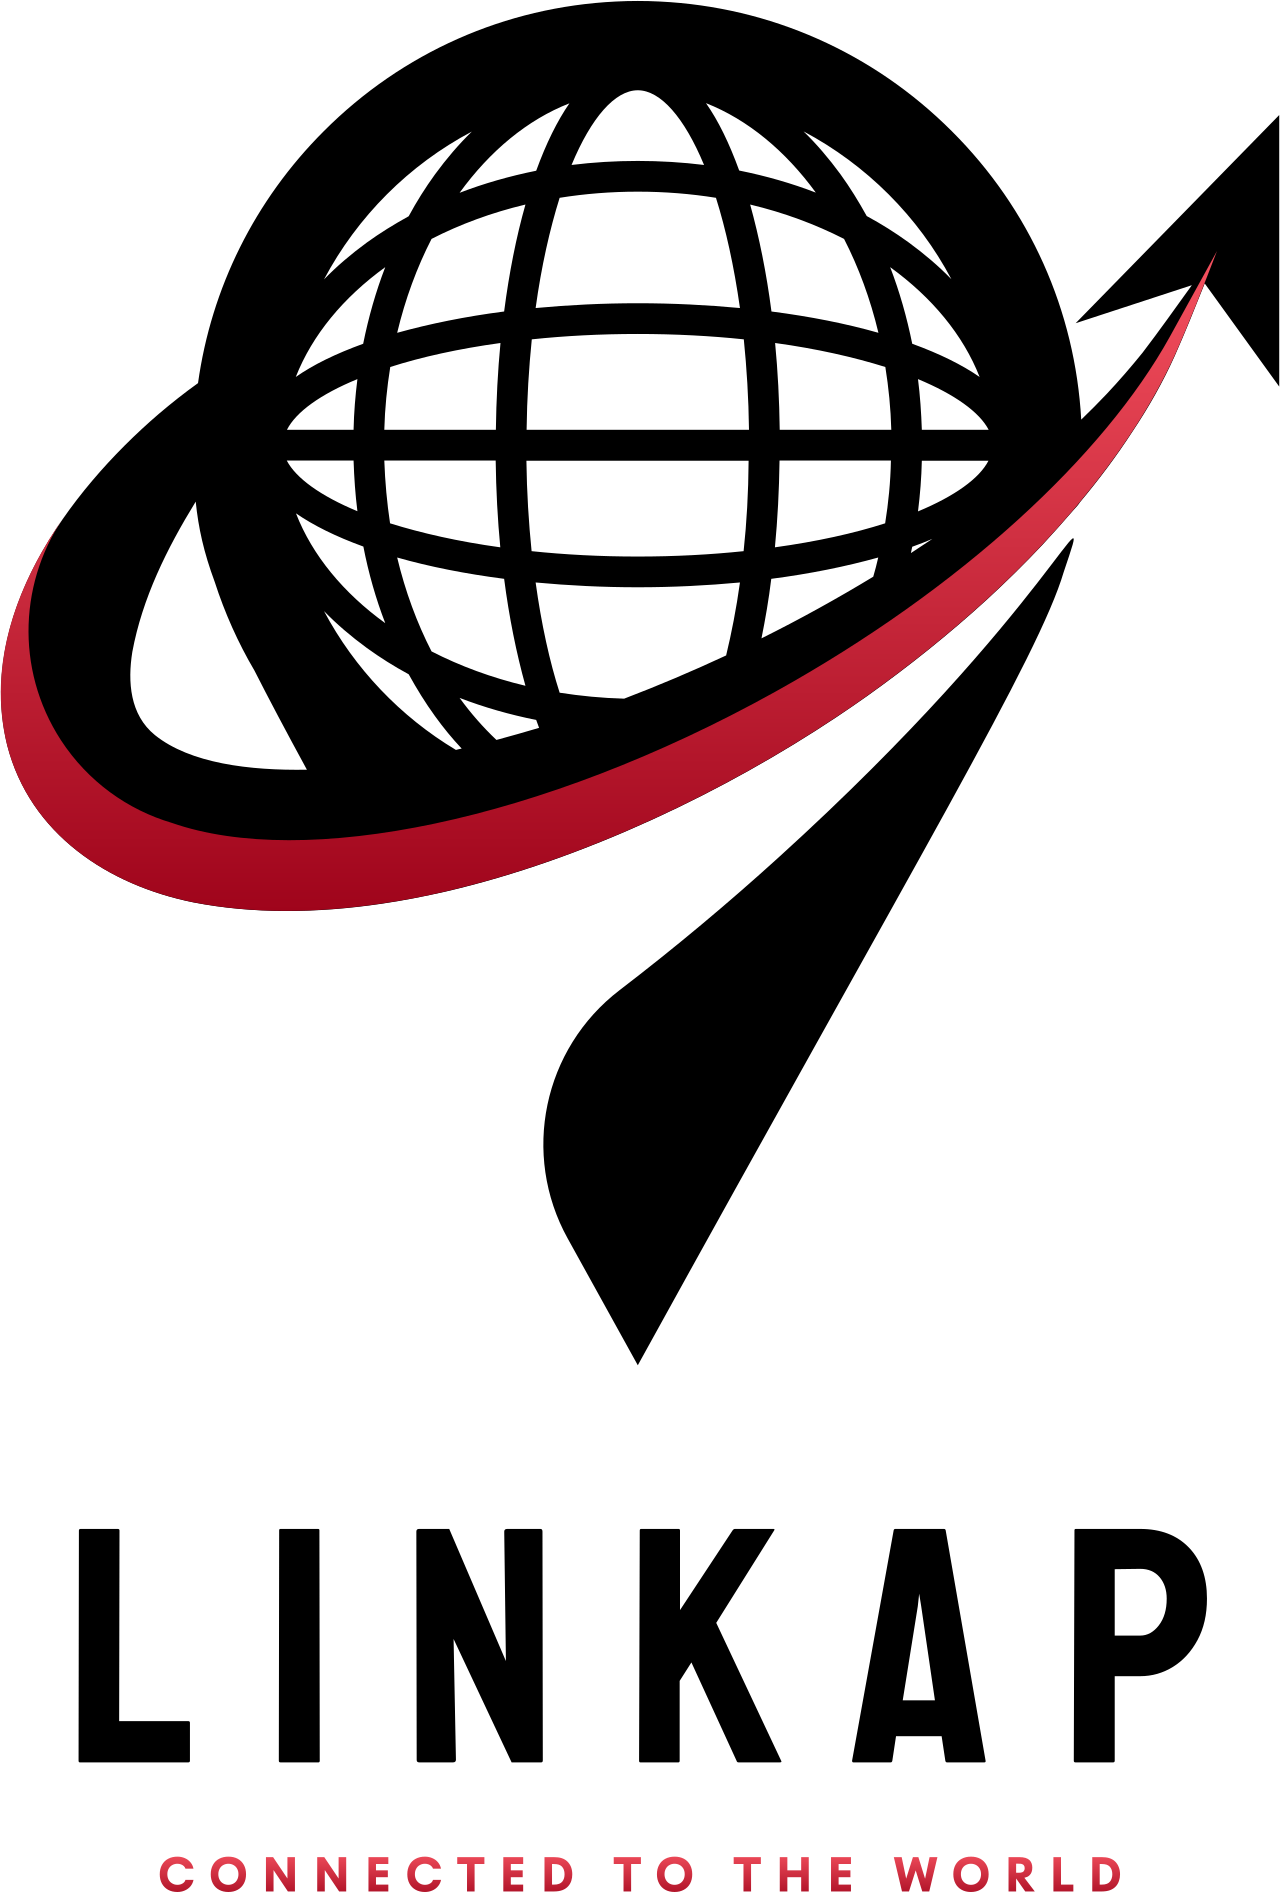 linkap's logo